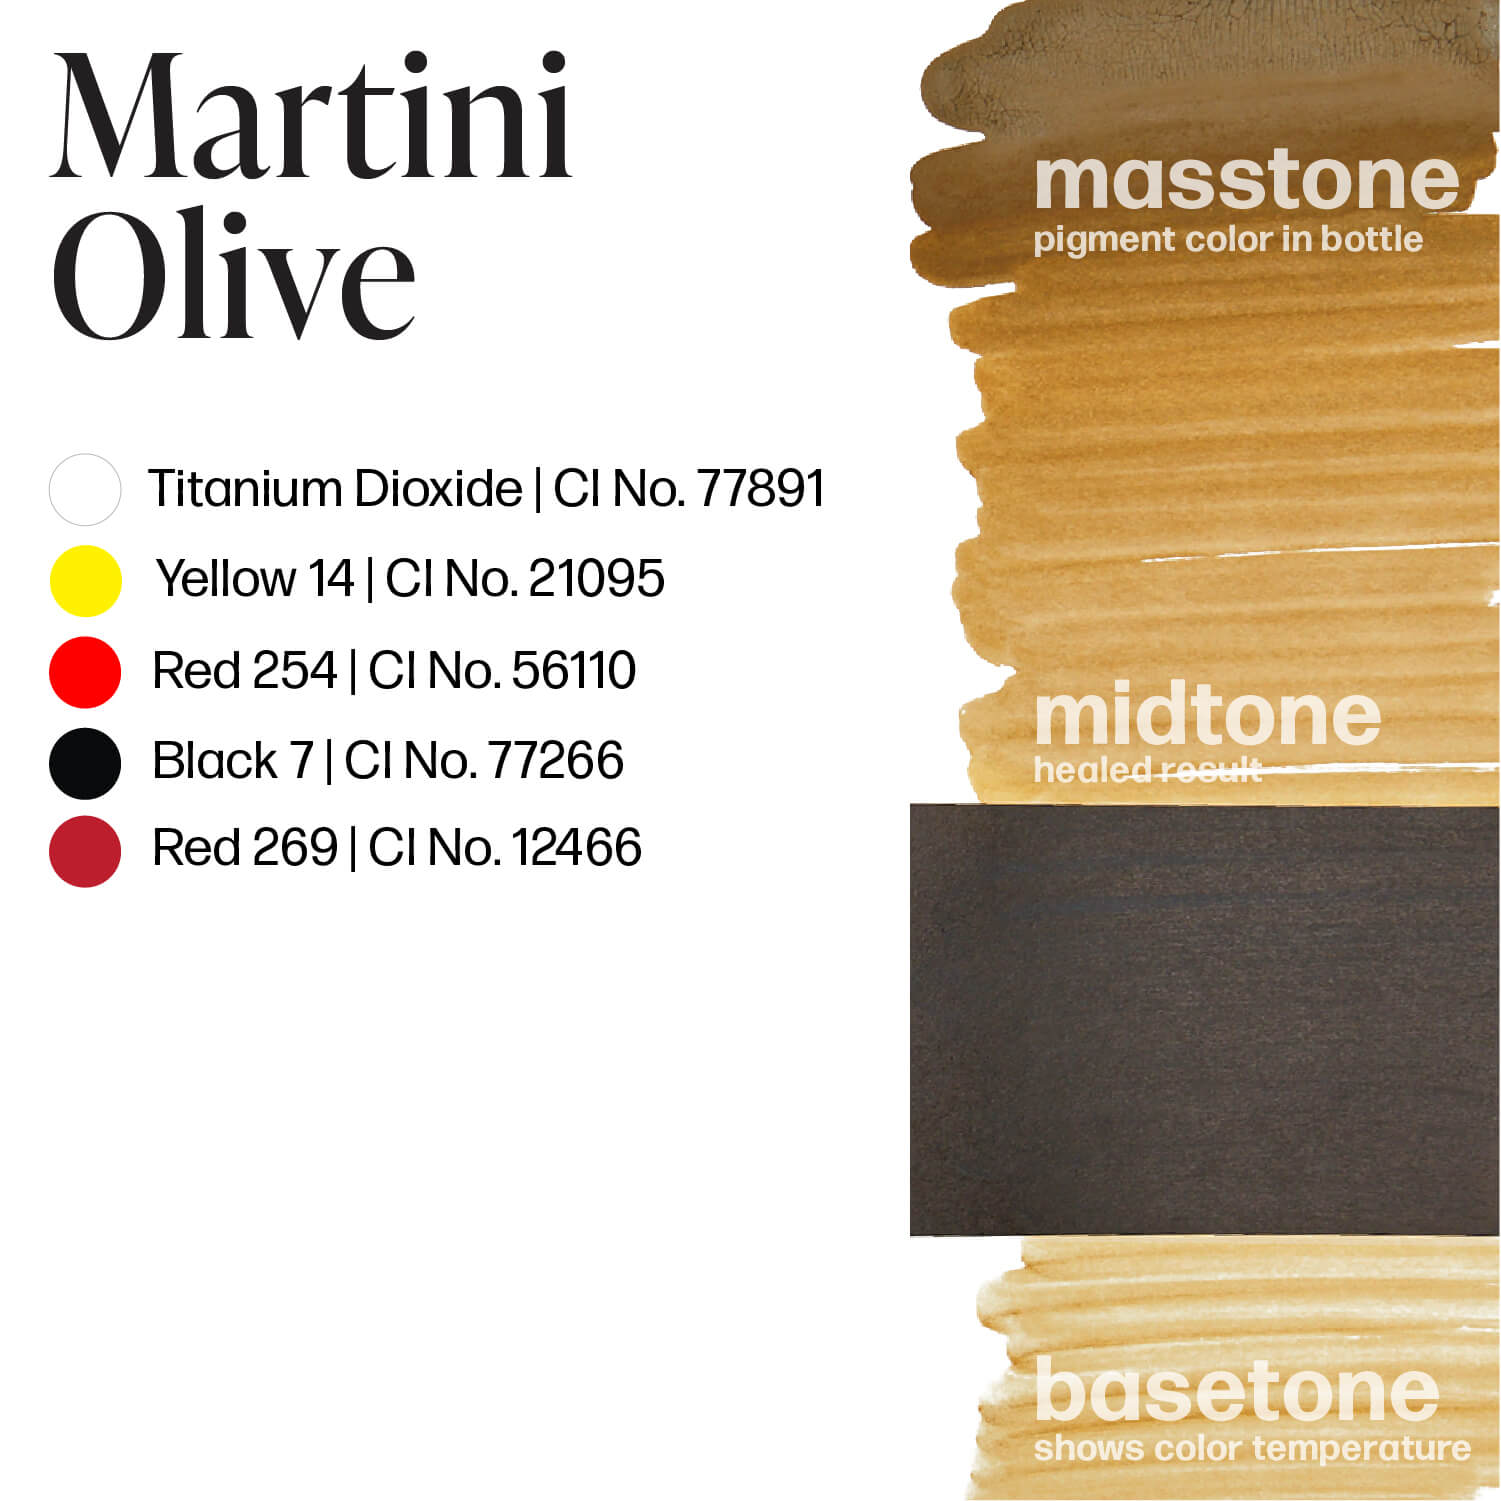 Perma Blend Martini Olive Brow Ink Drawdown Masstone Midtone Basetone